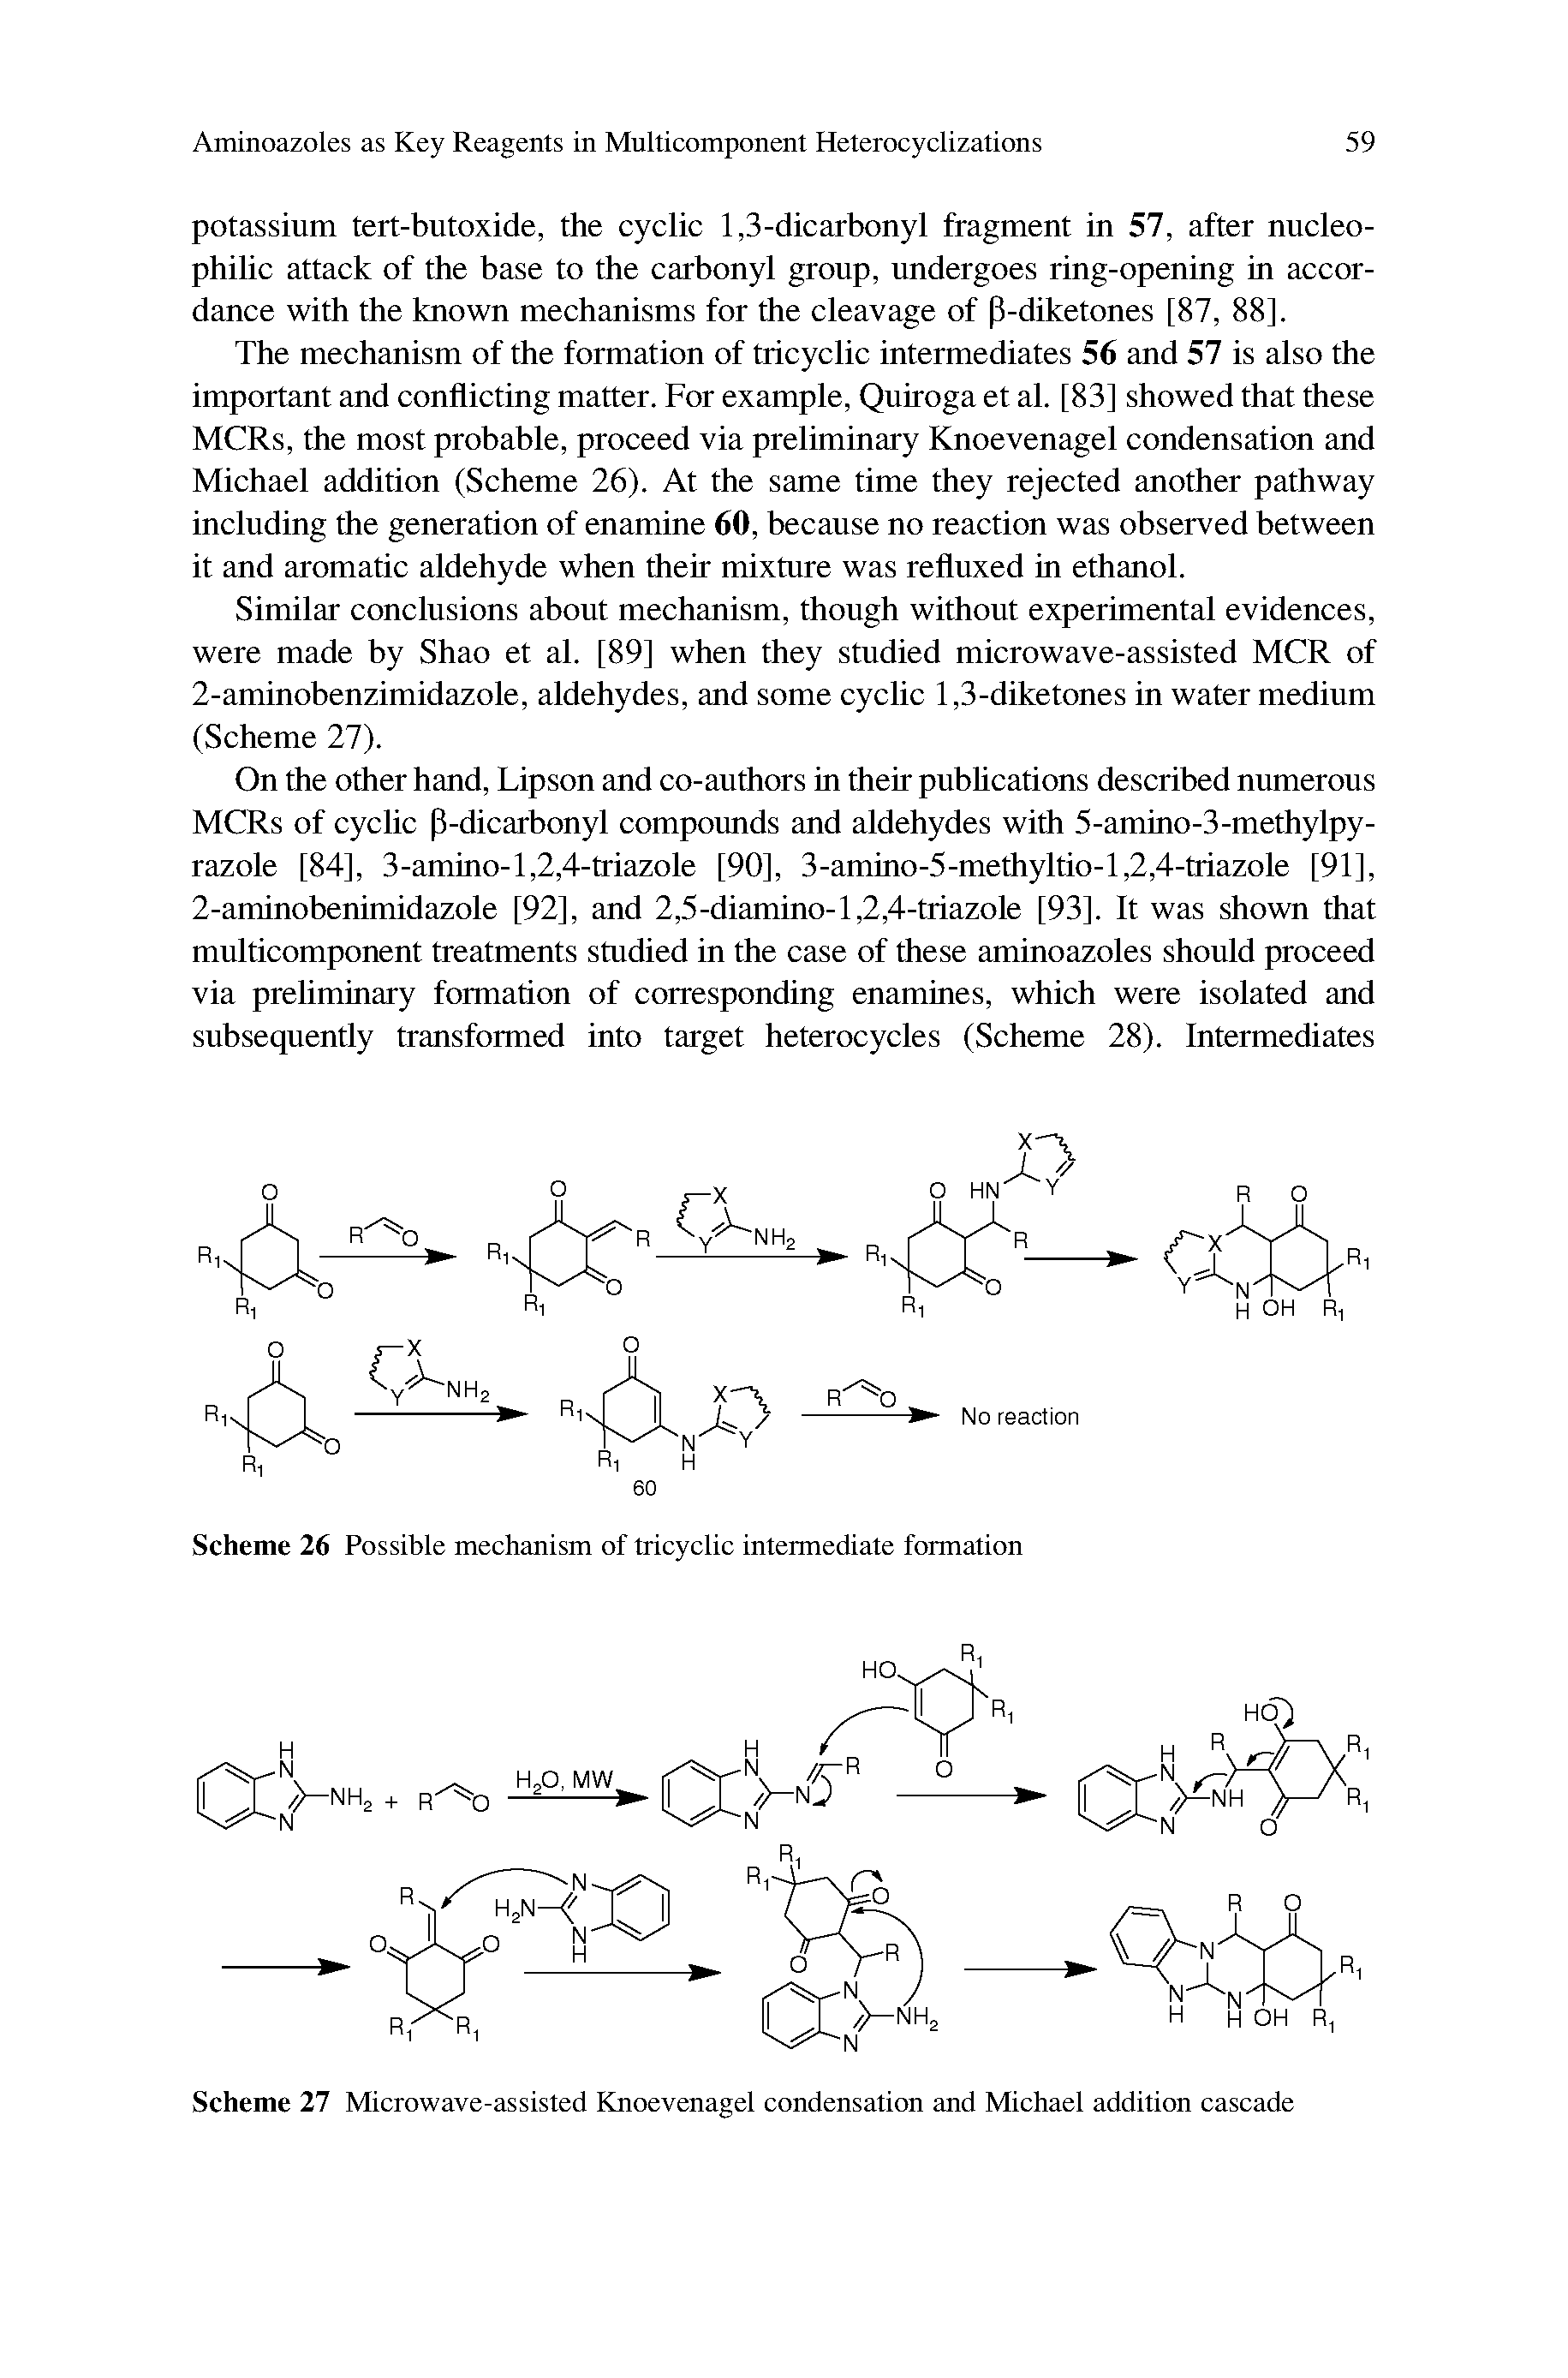 Scheme 26 Possible mechanism of tricyclic intermediate formation...